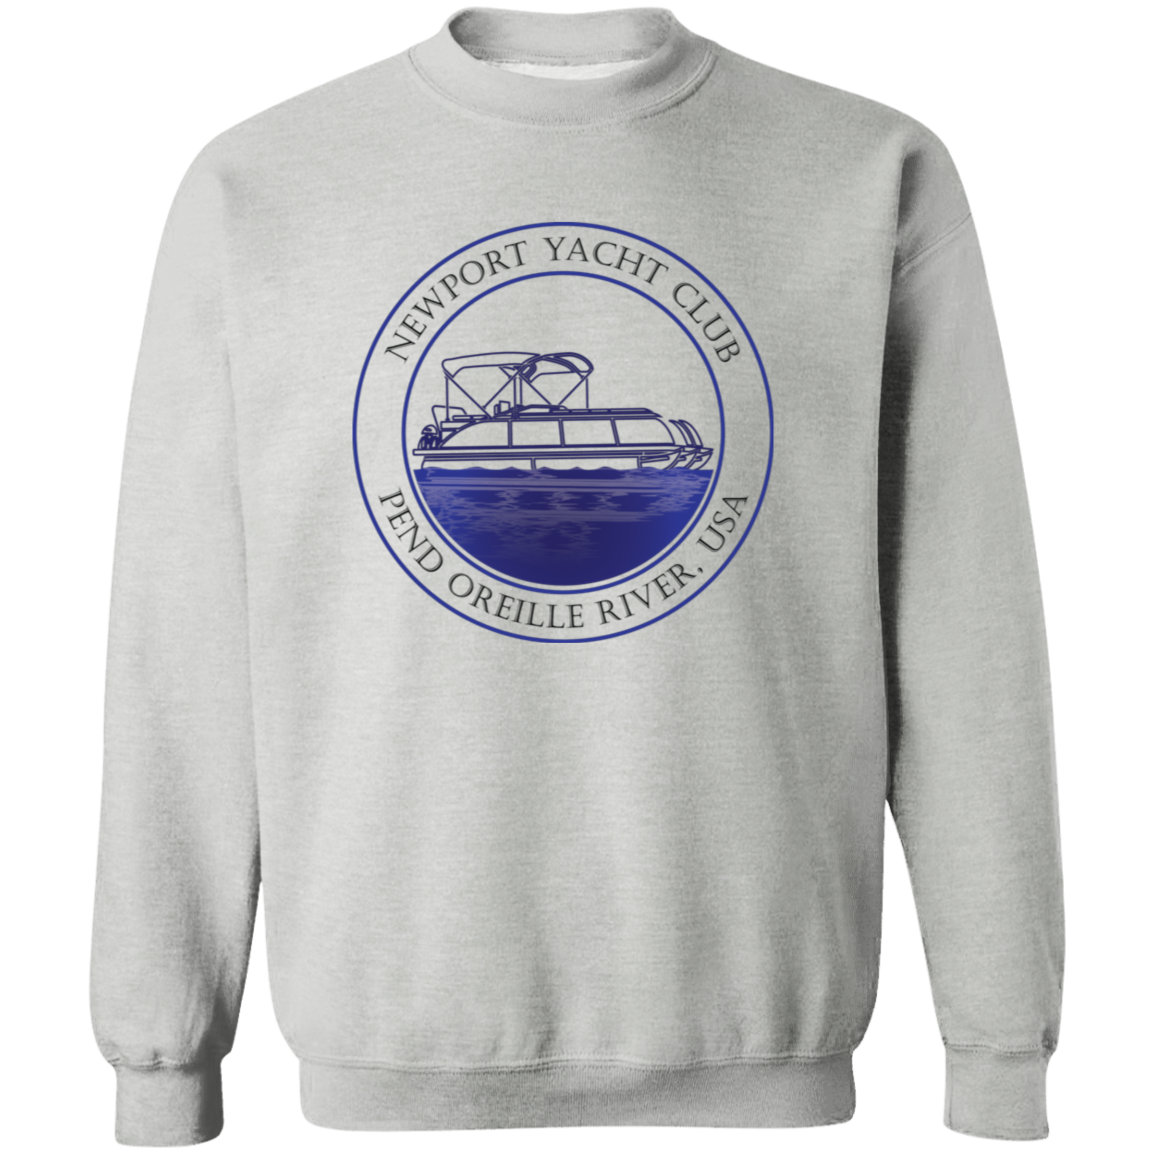 Newport Yacht Club - Sweatshirt